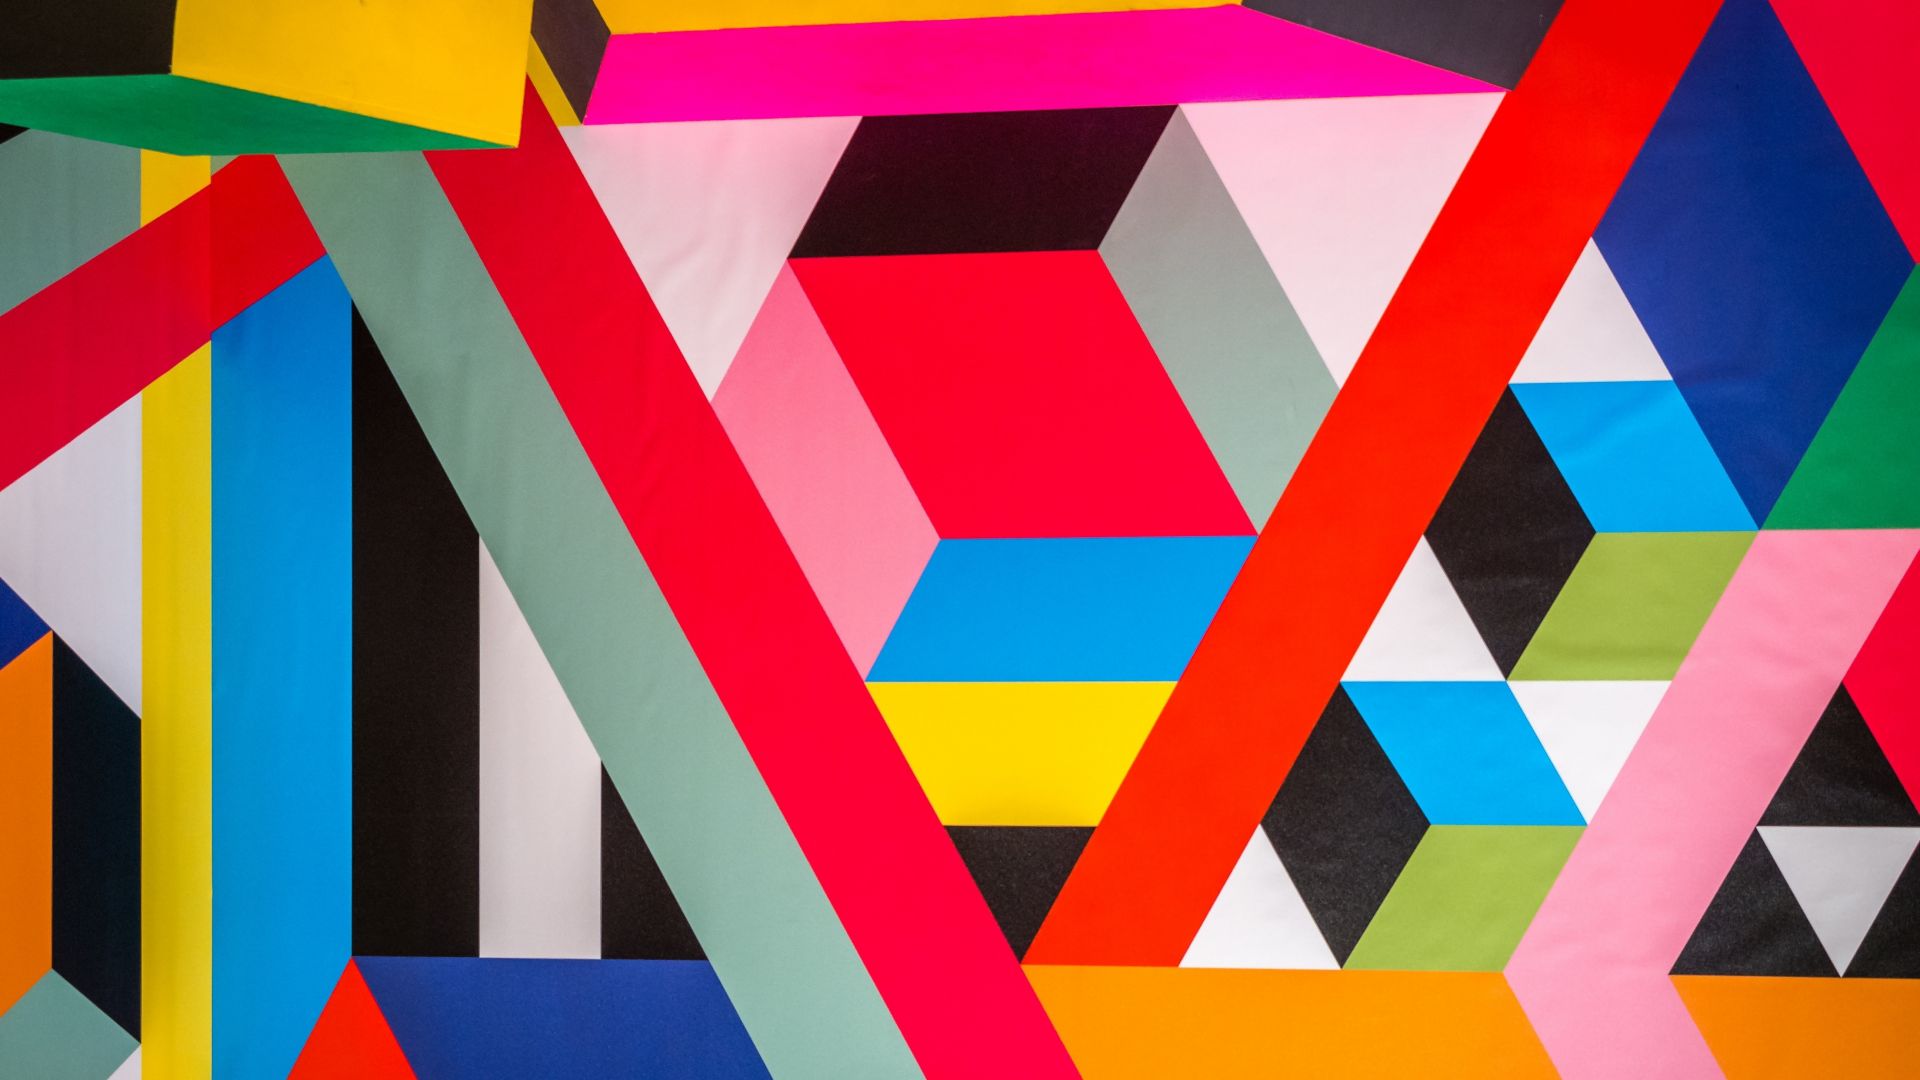 colorful geometric patterns wallpaper